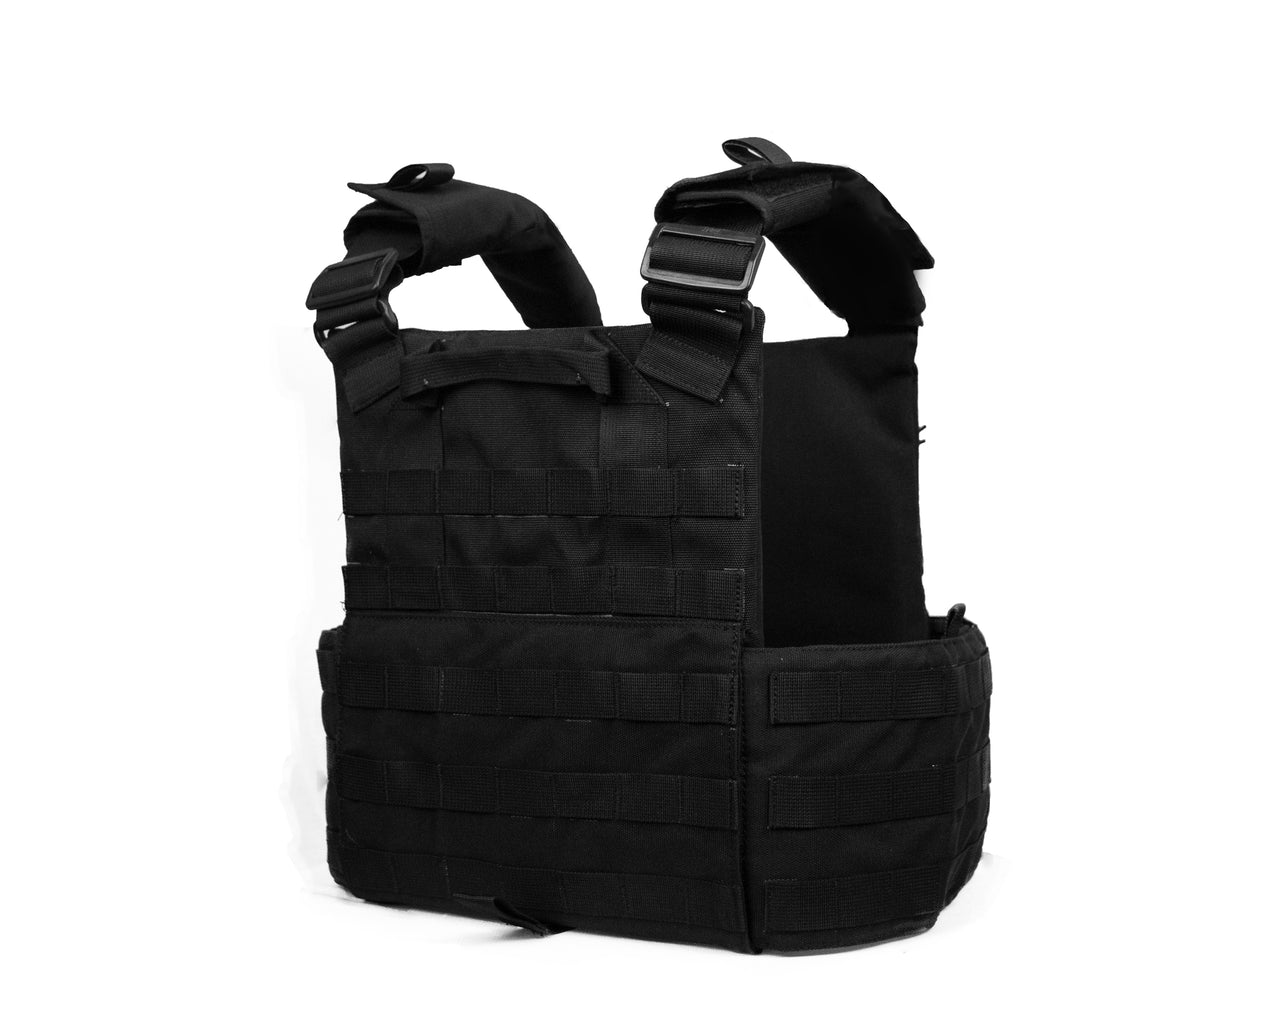 Tactical Bullet Proof Plate Carrier Vest (for Ordnance Issue Plates) - Black